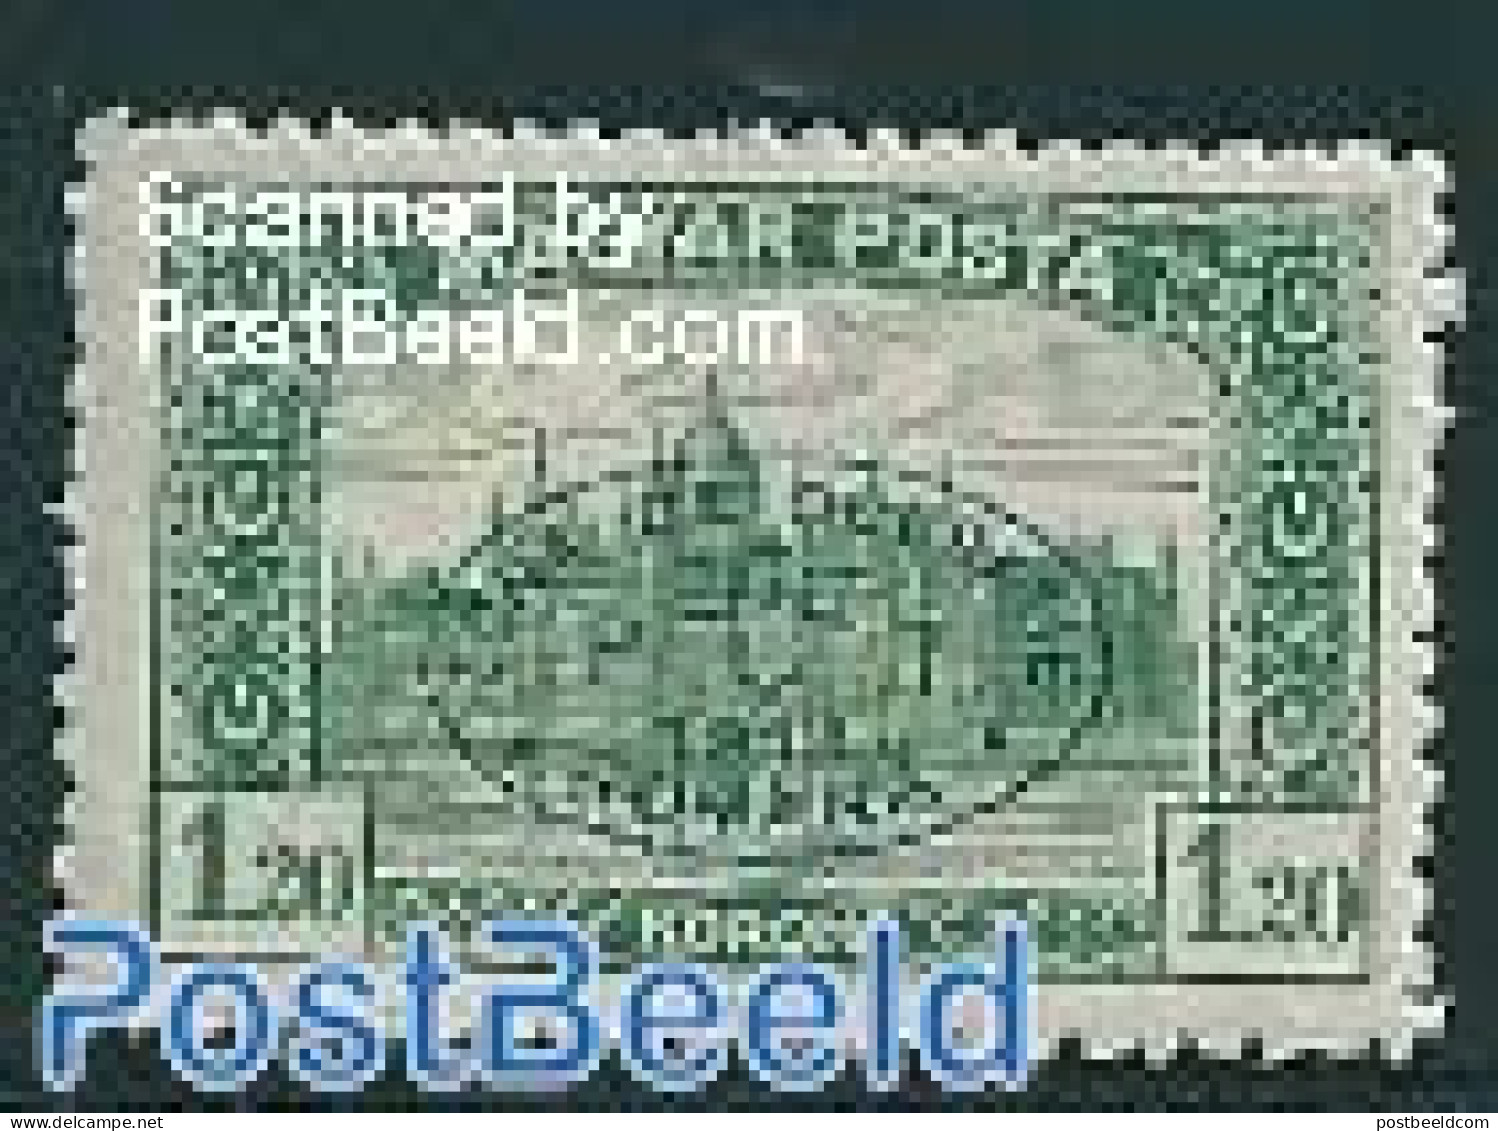 Hungary 1919 Debrecen, Romanian Occ, 1.20Kr, Stamp Out Of Set, Unused (hinged) - Unused Stamps